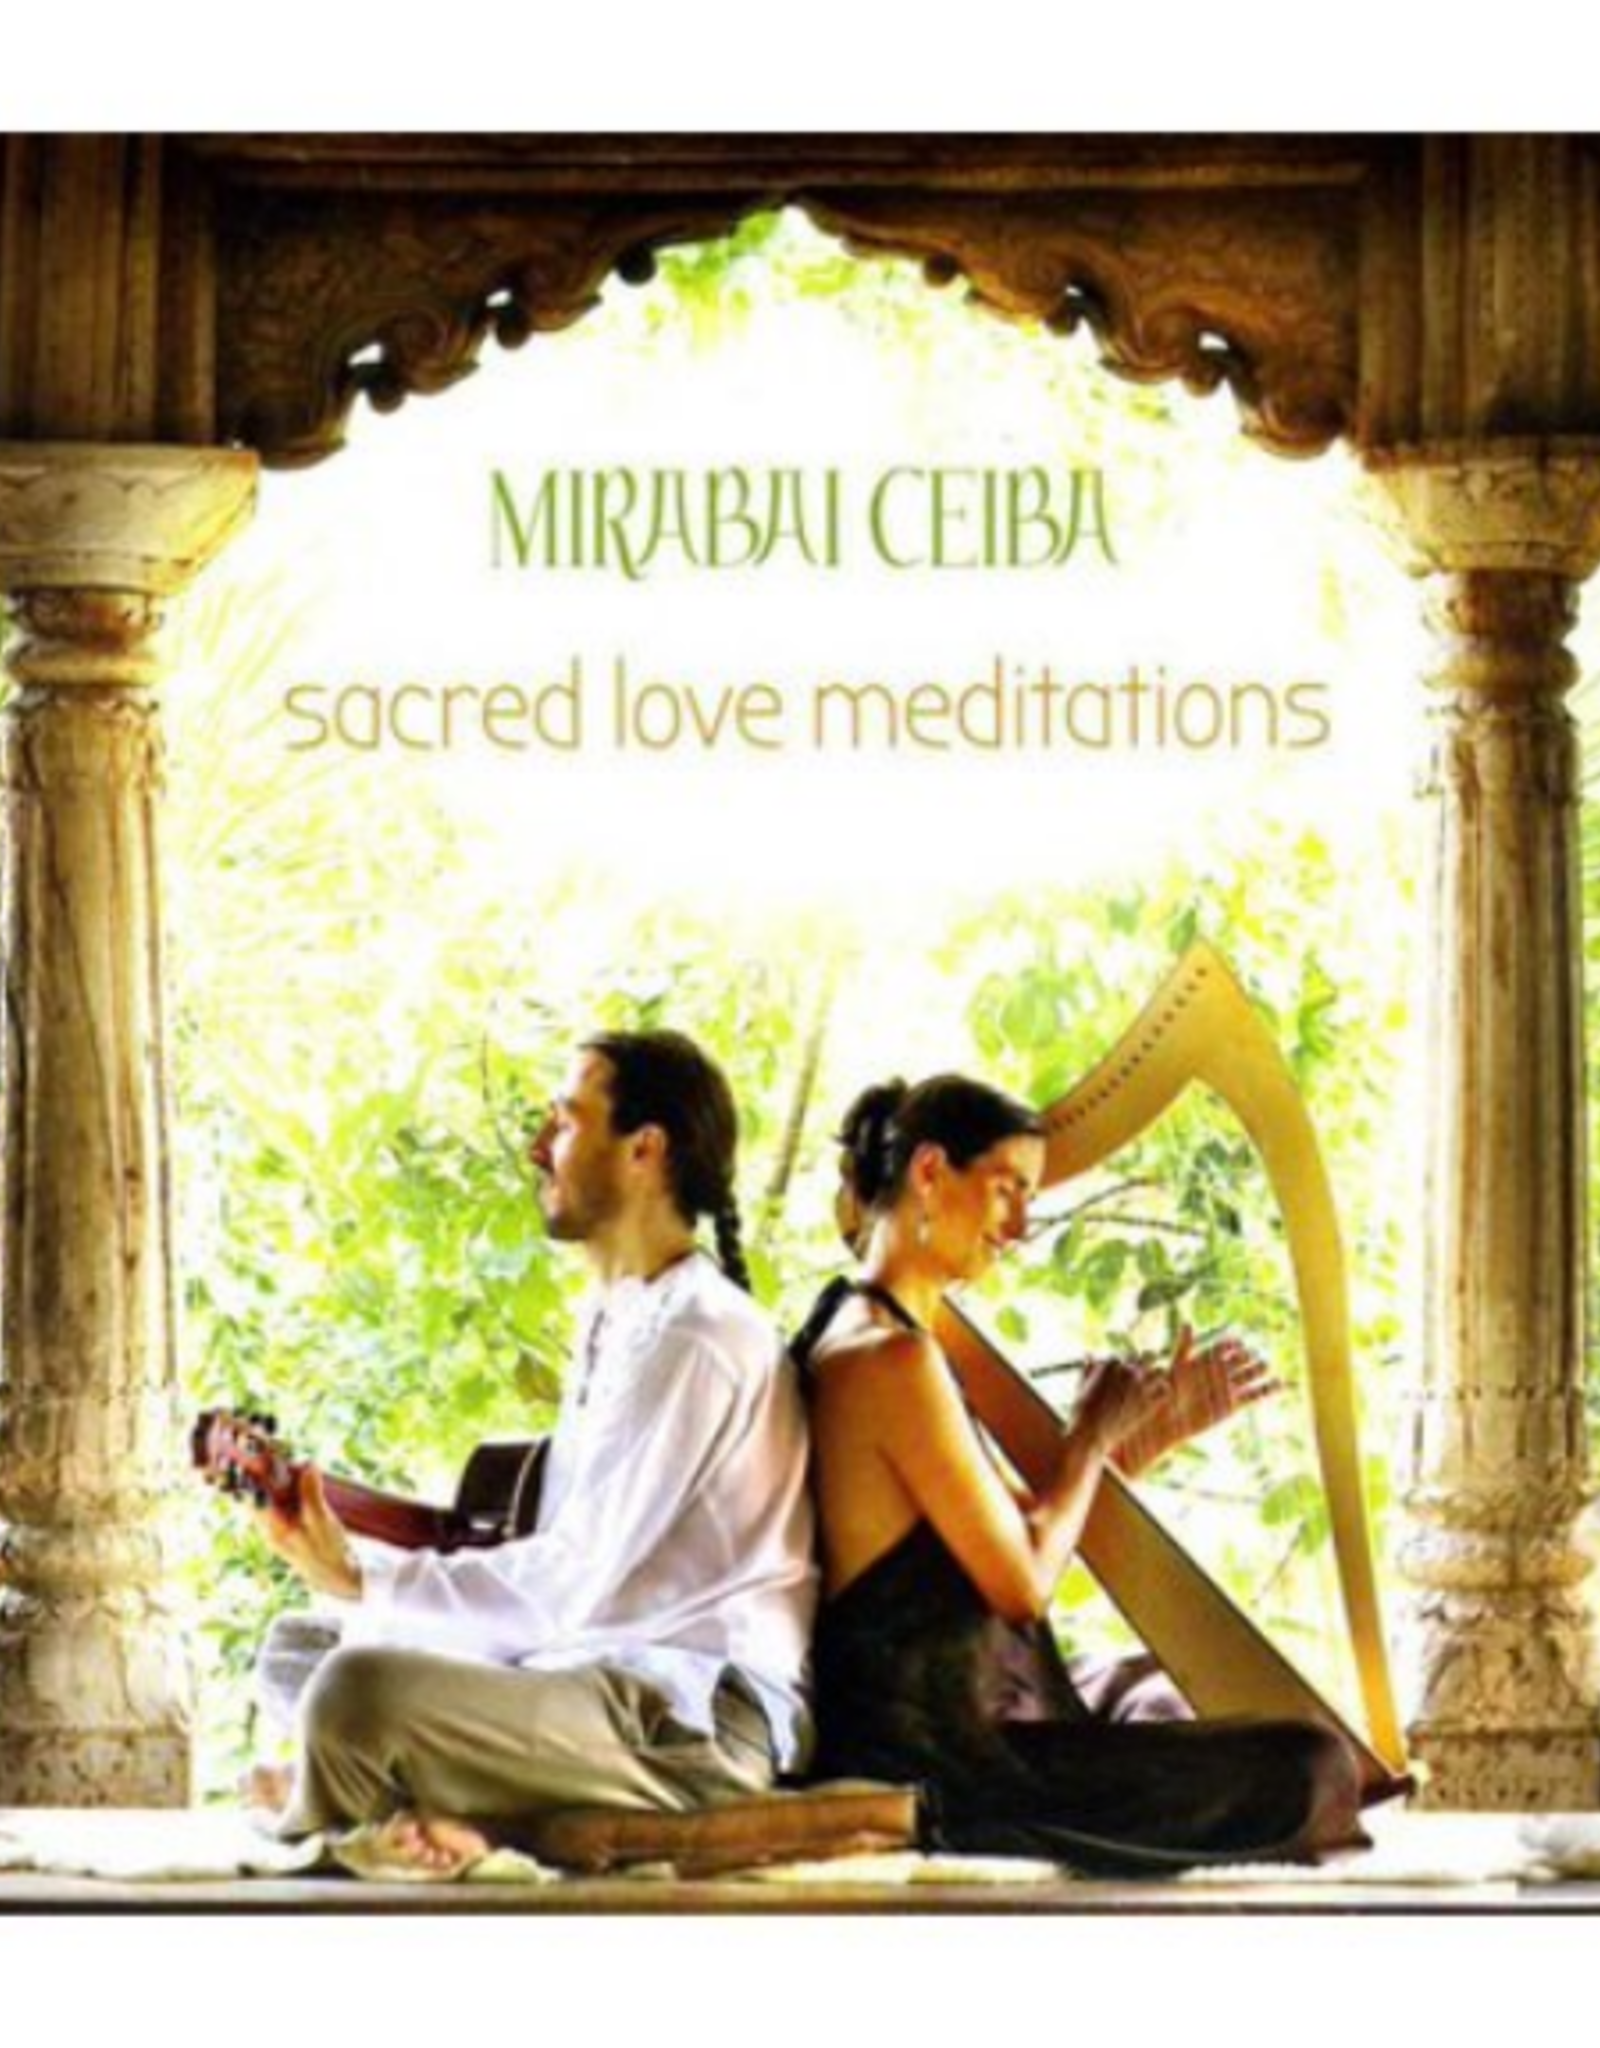 Mirabai Ceiba Sacred Love Meditations CD by Mirabai Ceiba